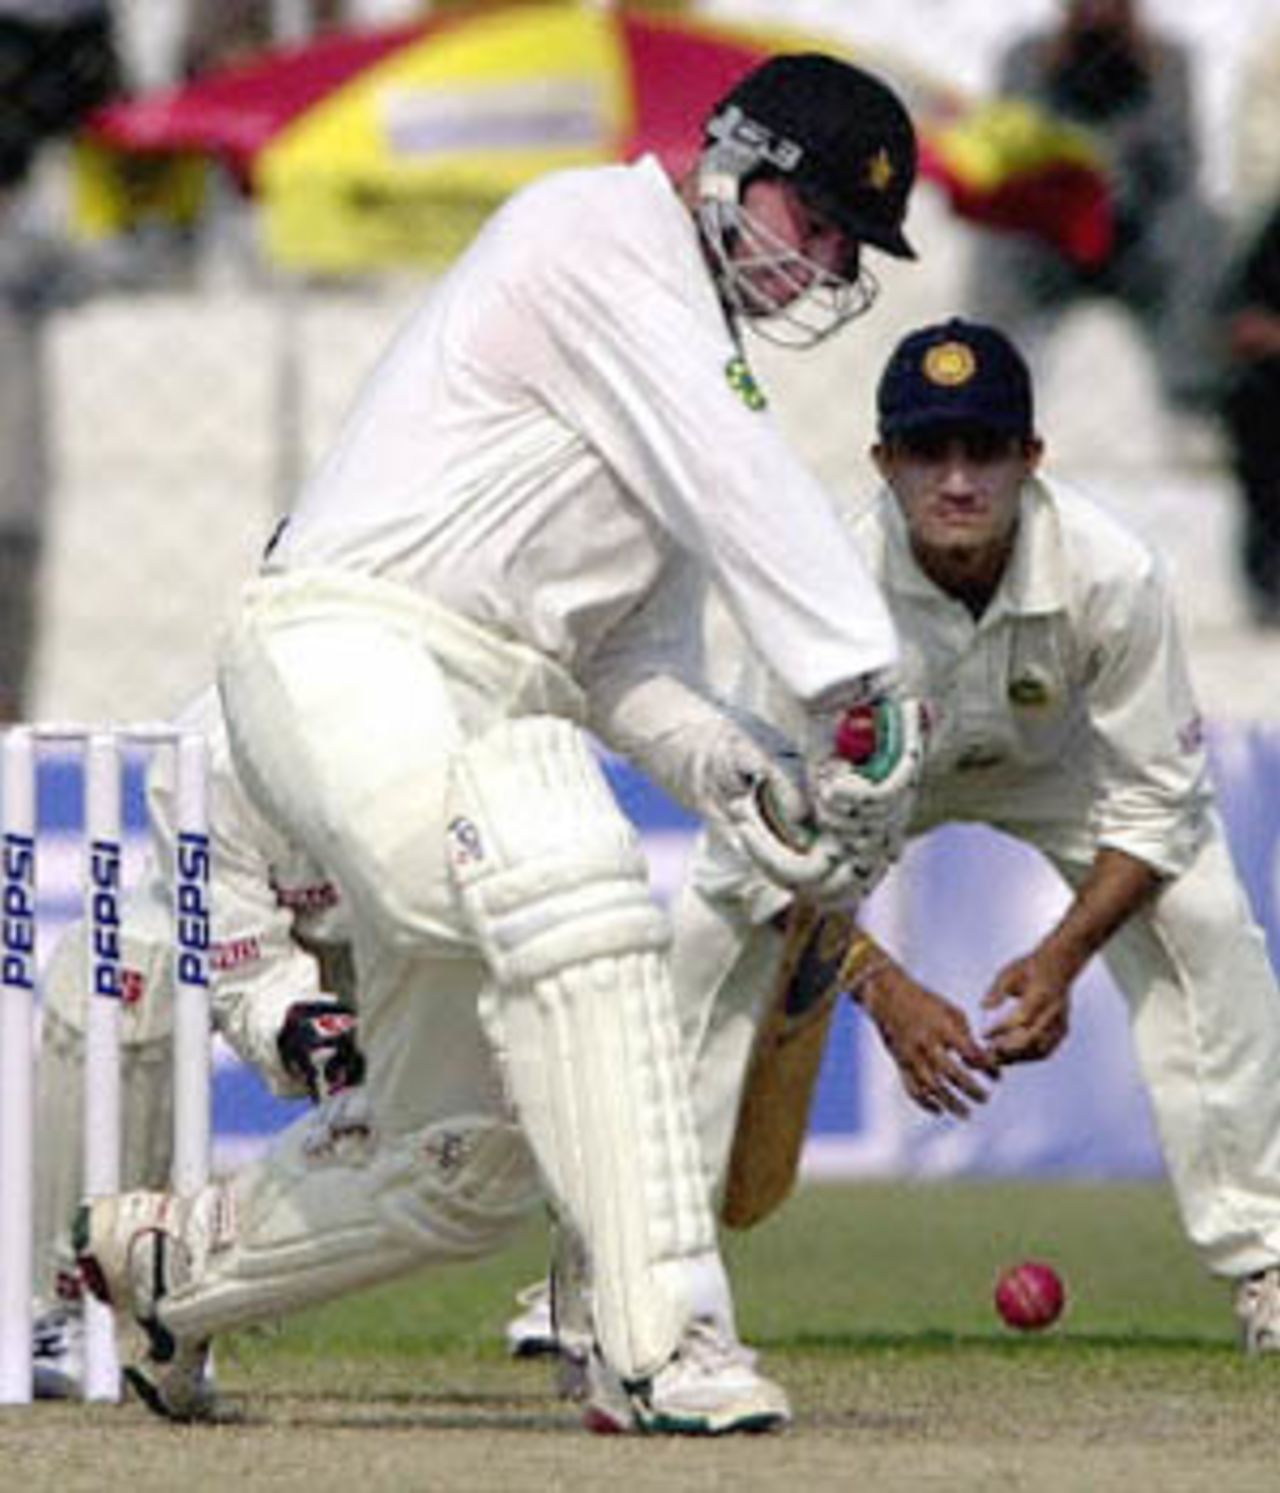 Campbell launches himself on the drive as Ganguly watches, Zimbabwe in India, 2000/01, 1st Test, India v Zimbabwe, Feroz Shah Kotla, Delhi, 18-22 November 2000 (Day 1).